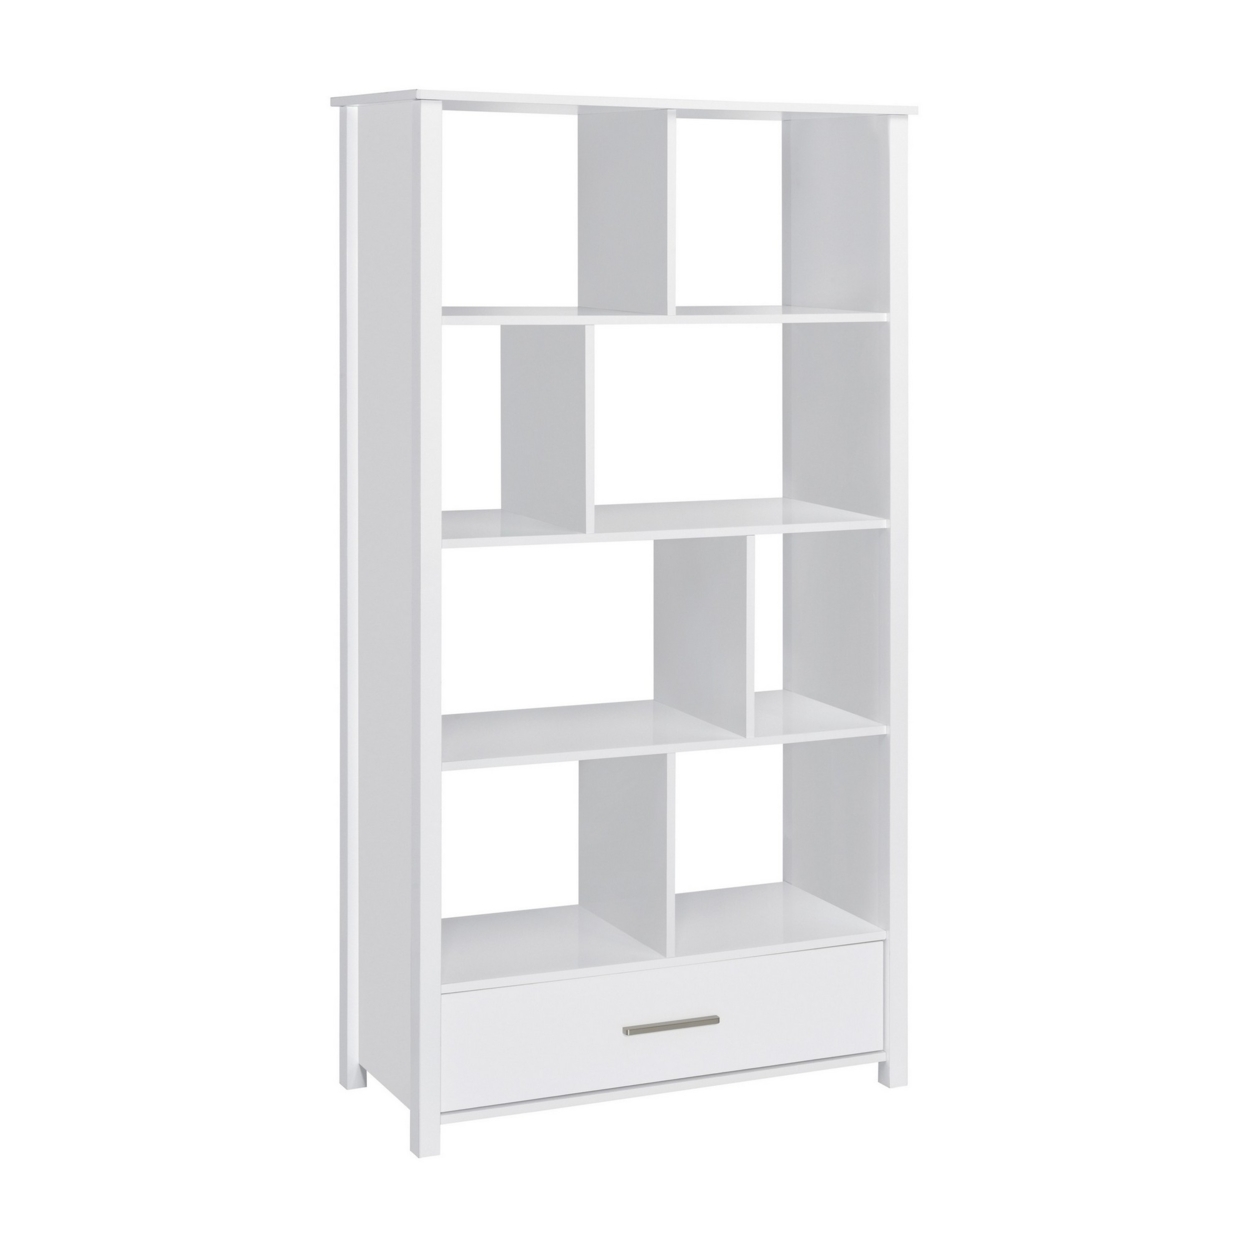 Wim 68 Inch Geometric Bookcase Etagere With 8 Shelves, Glossy White Finish- Saltoro Sherpi